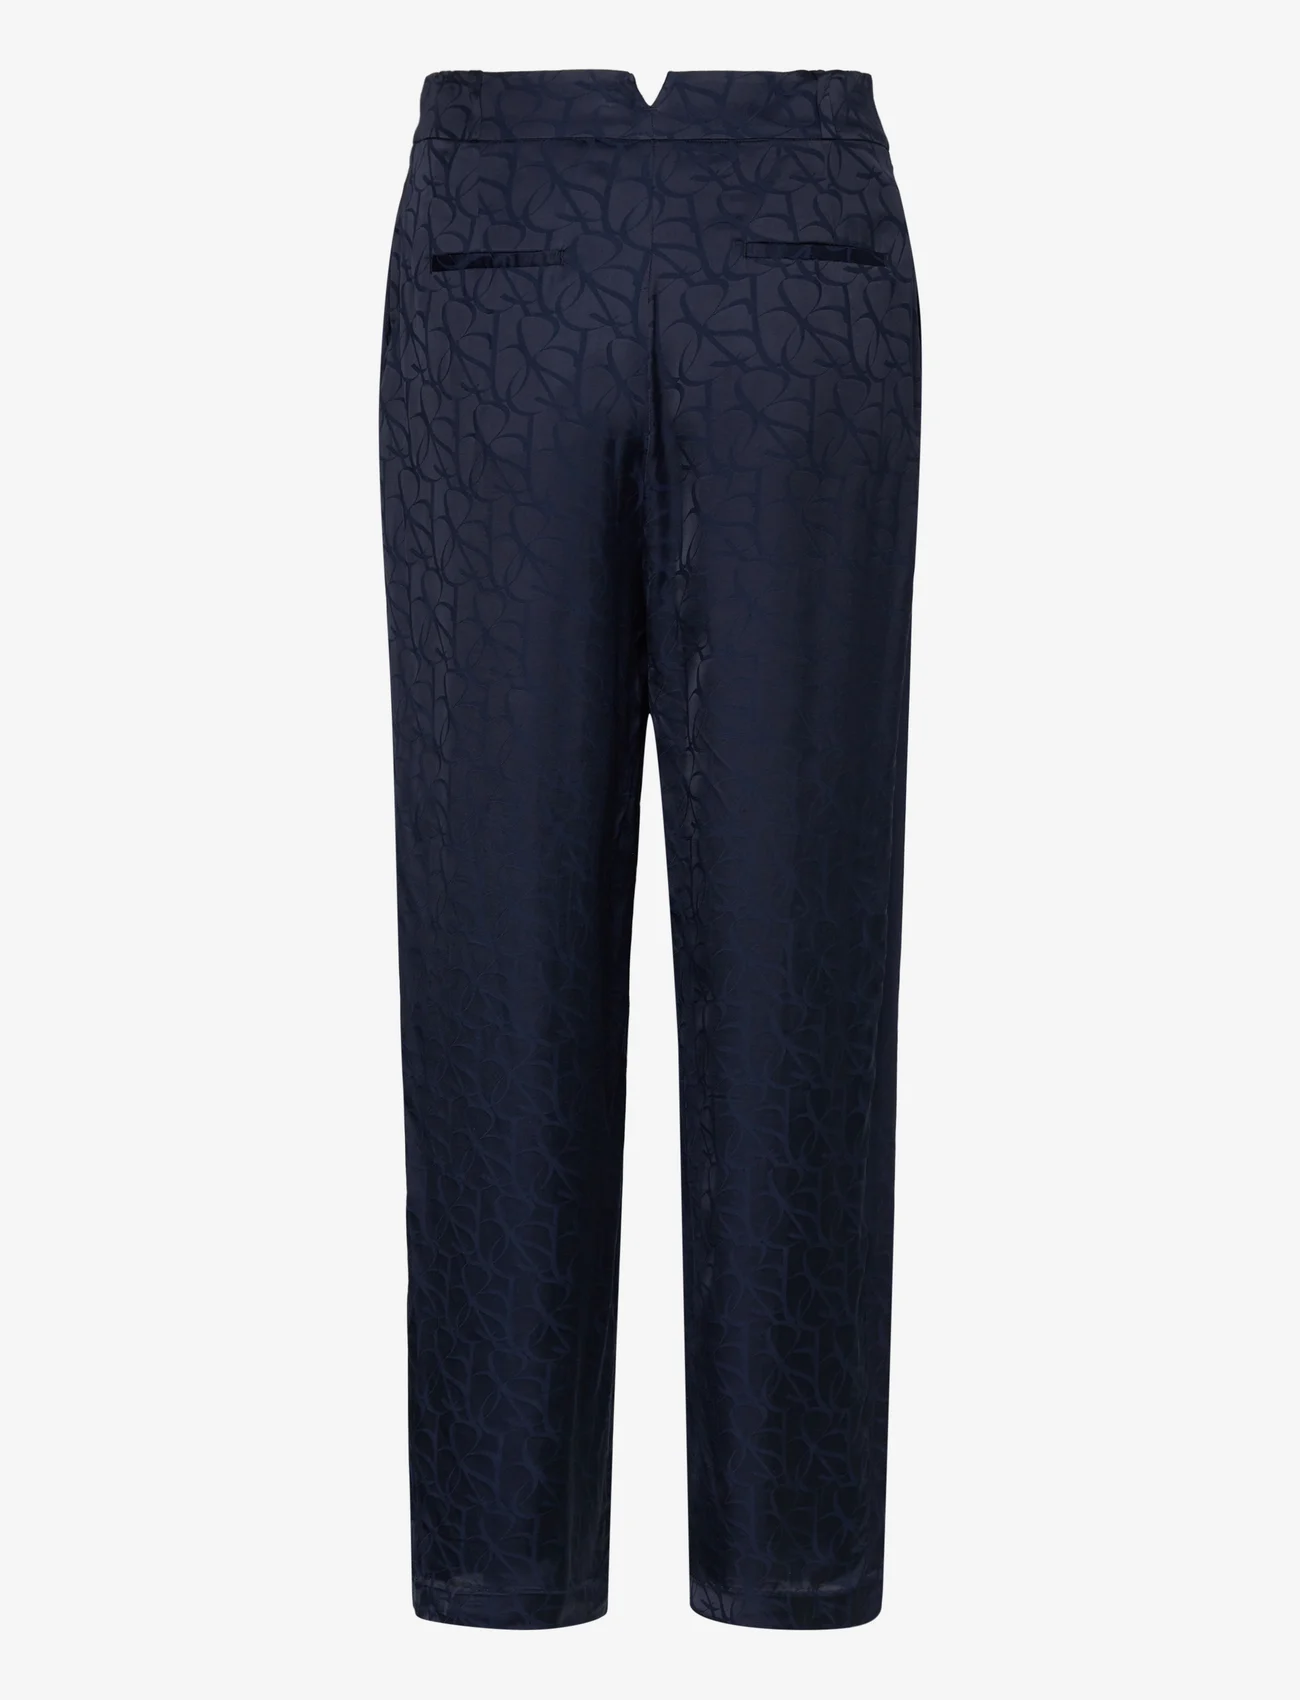 ba&sh - MOLOY PANT - bukser med brede ben - bleunuit - 1